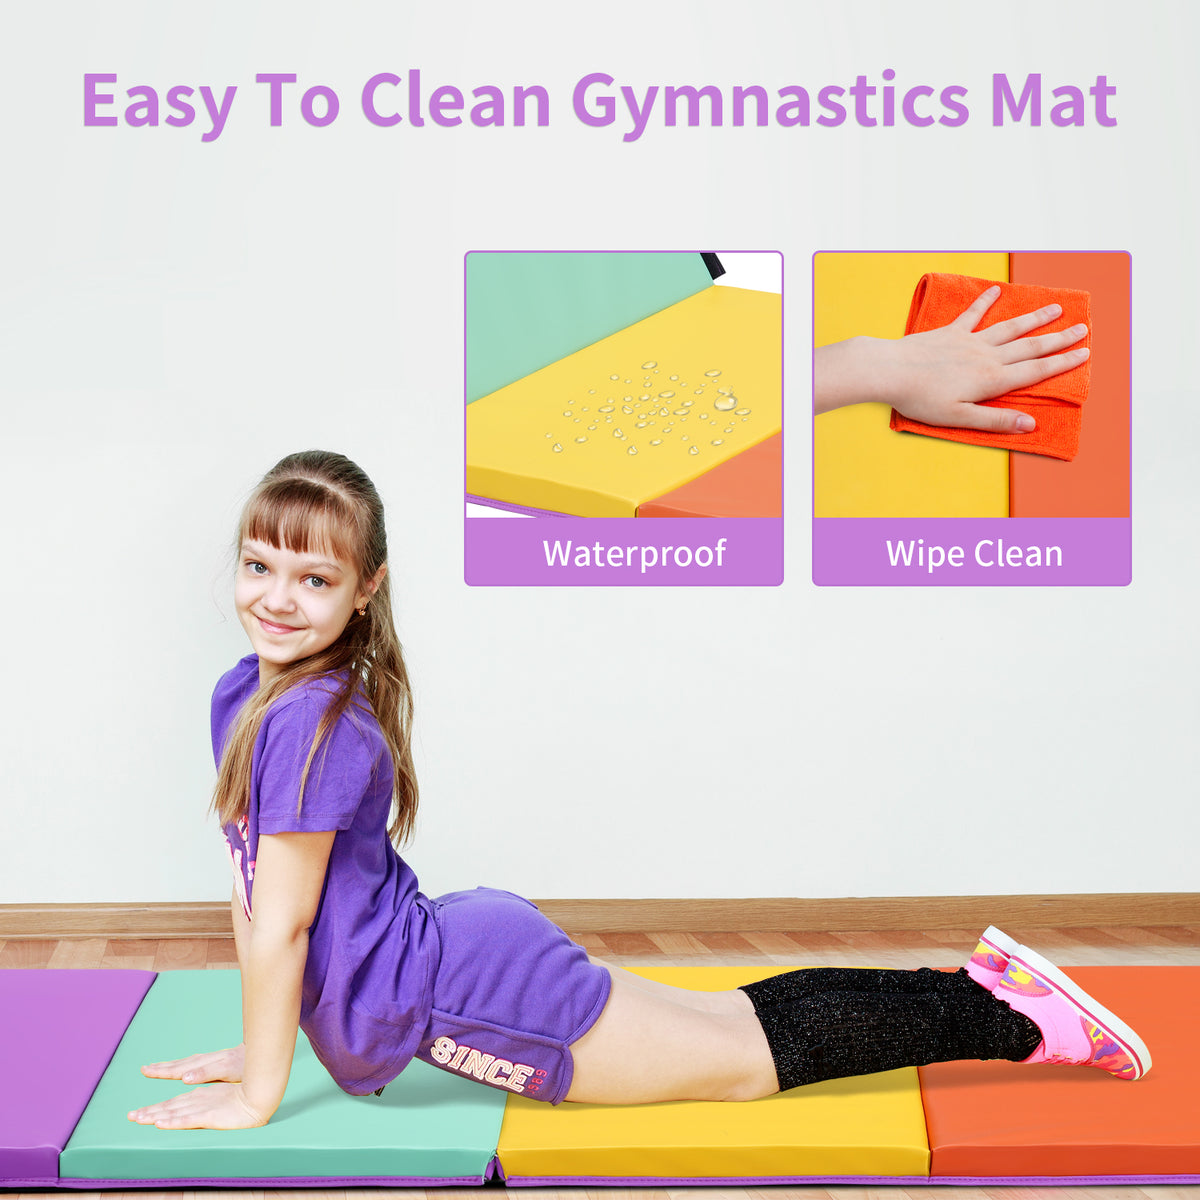 ZENOVA Gymnastics Mat 5-panel folding exercise mat 6’x2’x1.8”Lightweight Portable Kids’Tumbling Mat with Carrying Handles for Home Gym Workout & Active Play